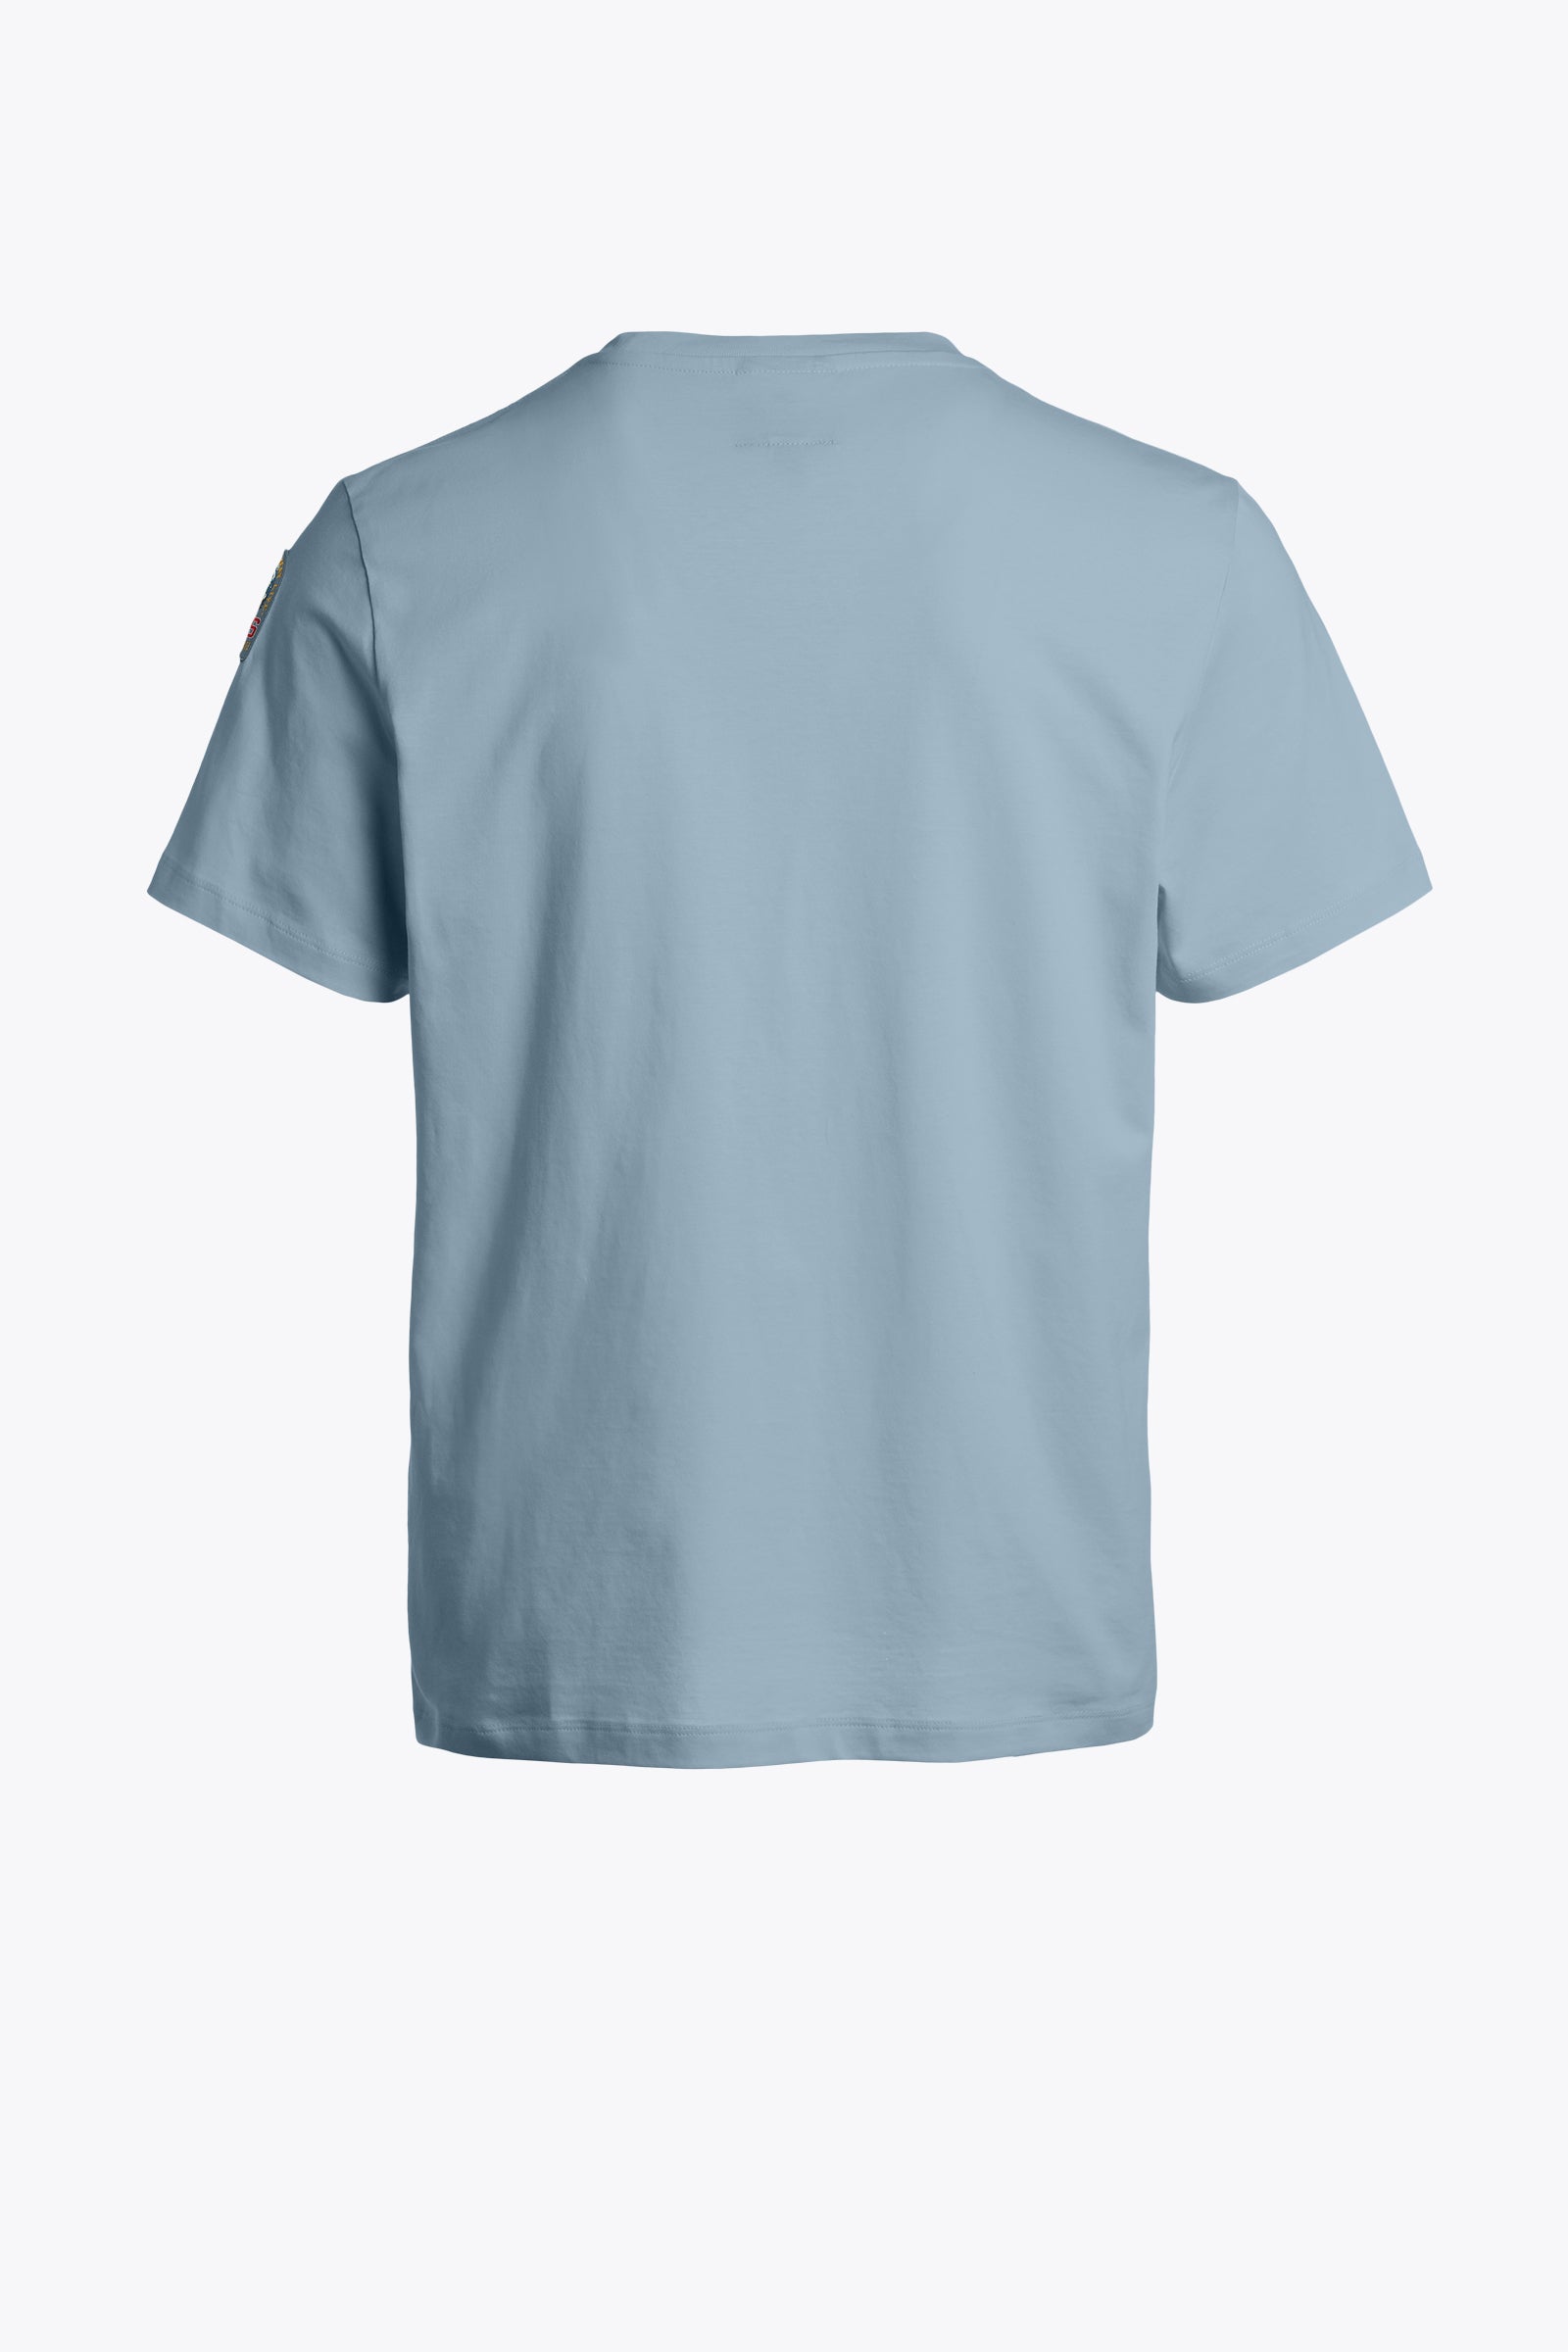 Parajumpers Shispare T-Shirt 0312 Bluestone